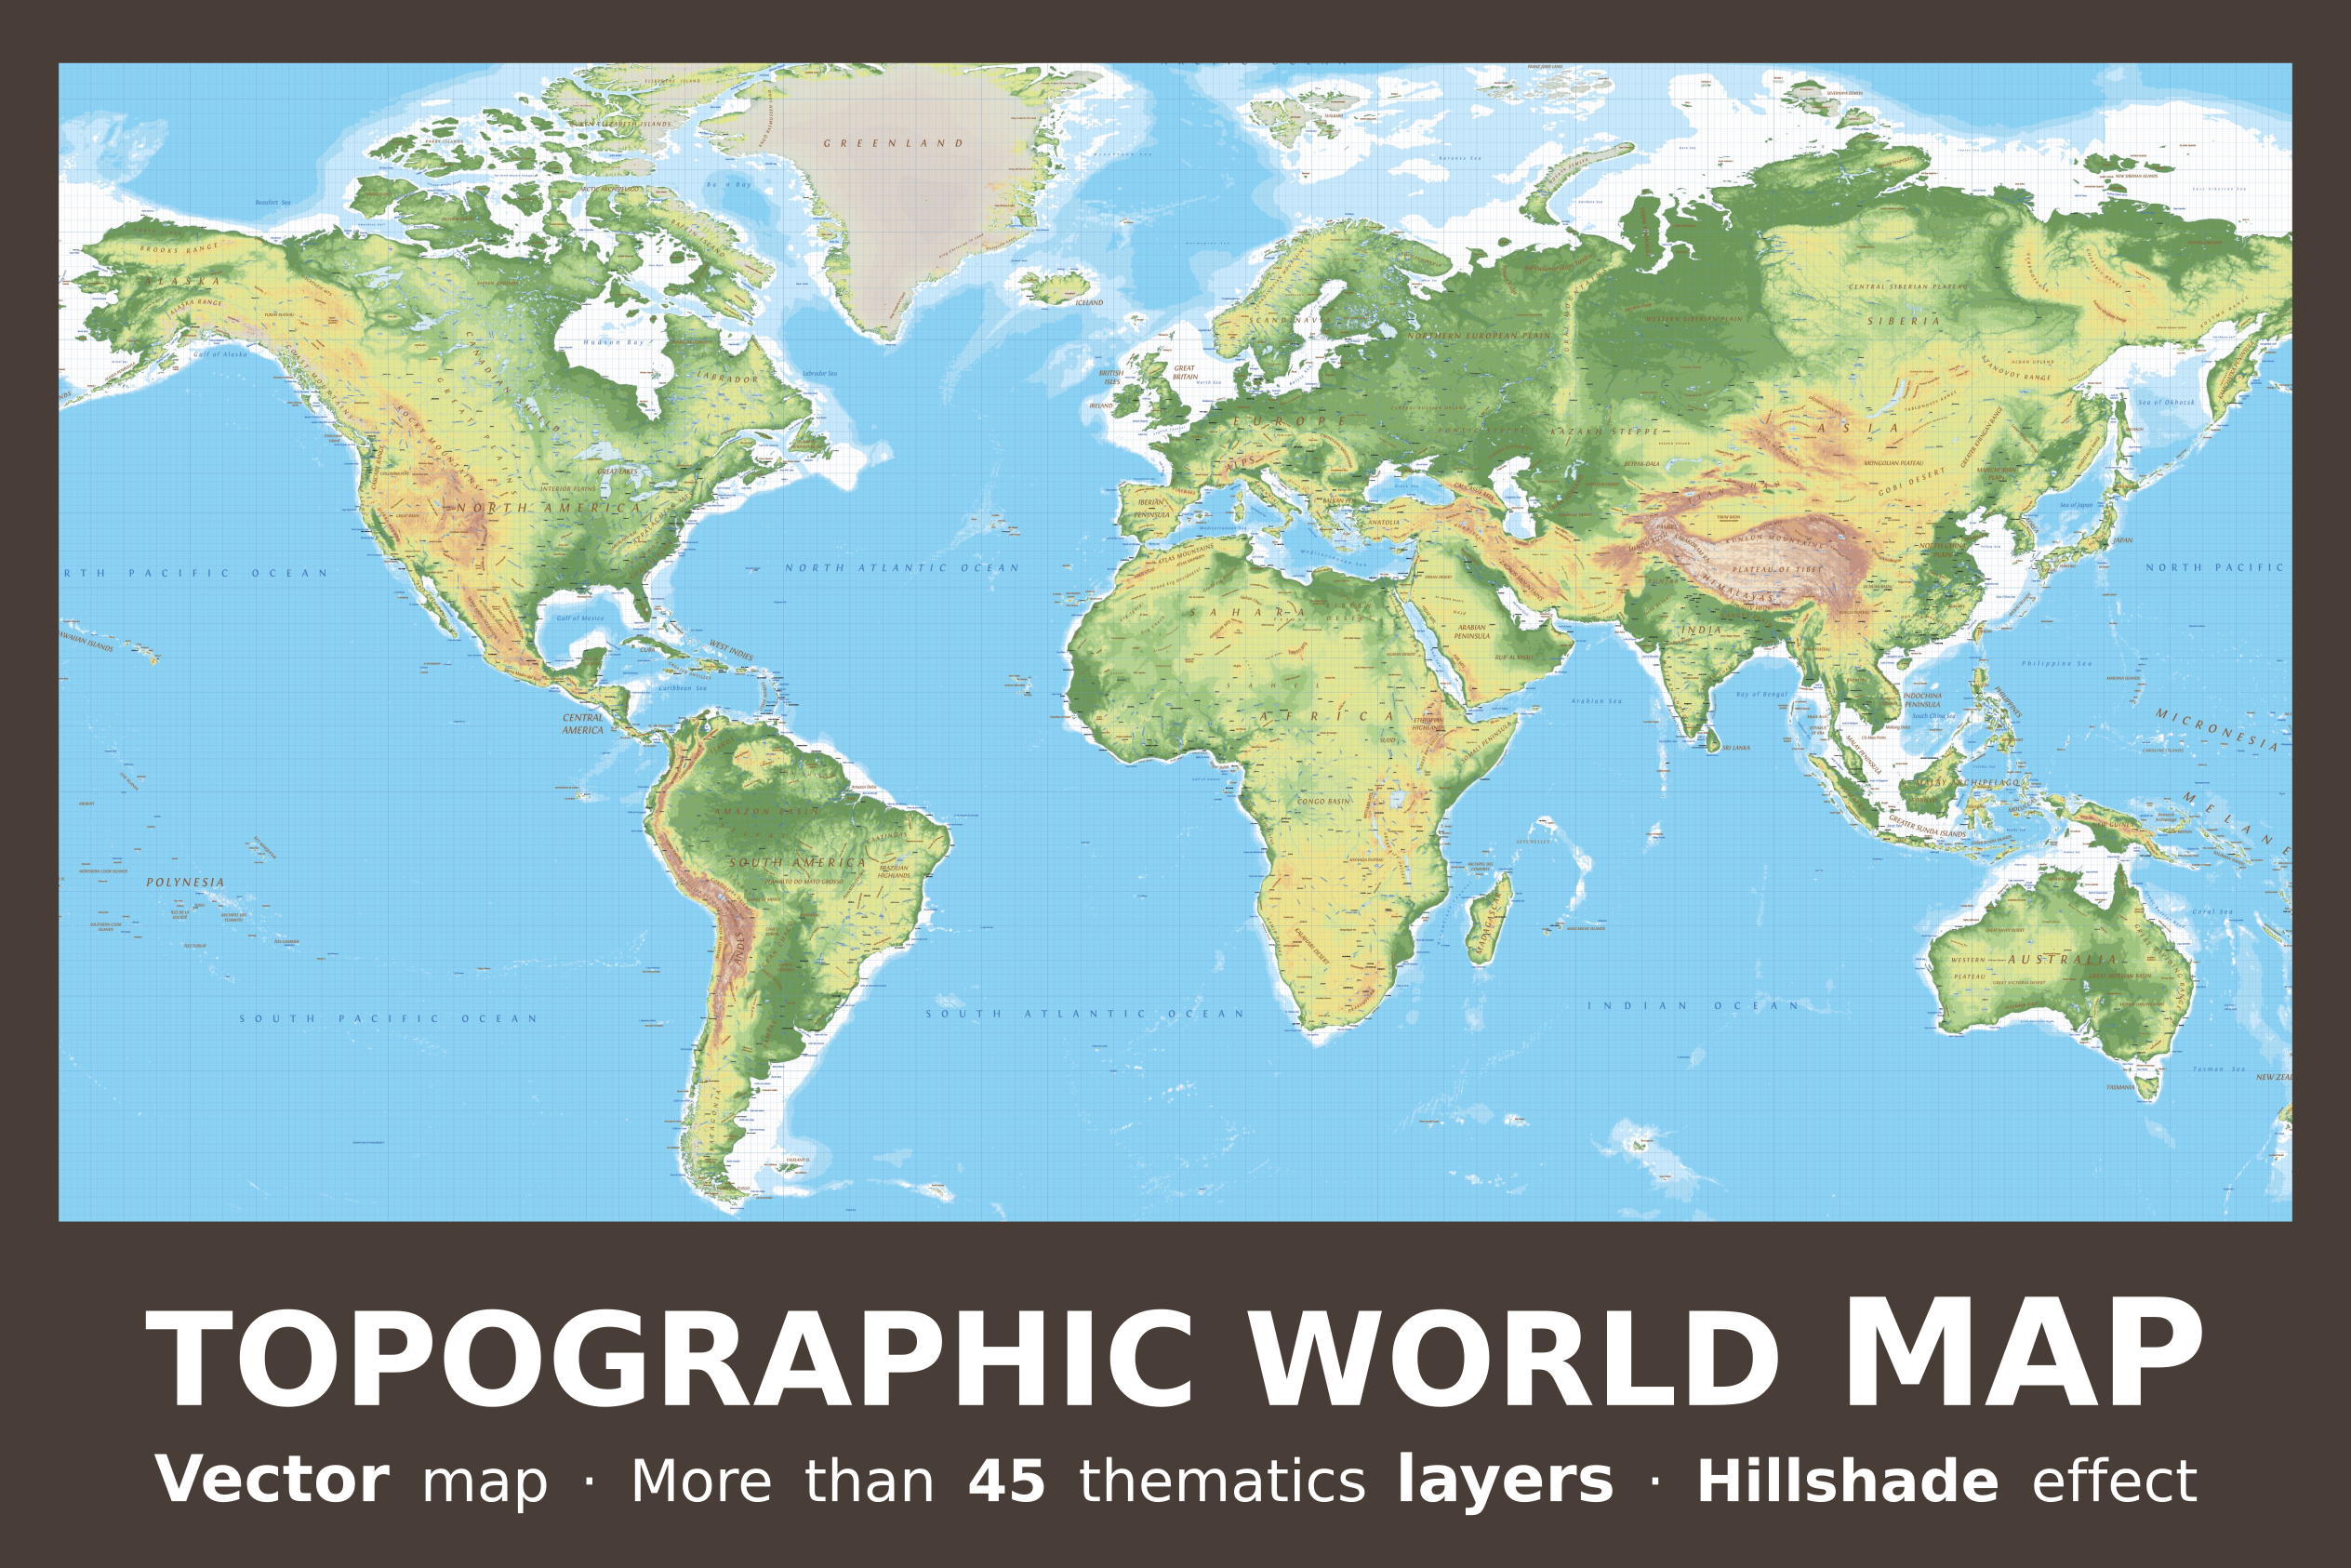 Ori 3621622 9n9vnxvdt33vmex2vs7ynlkrx3mv34oc9kj33bj3 Topographic World Vector Map 